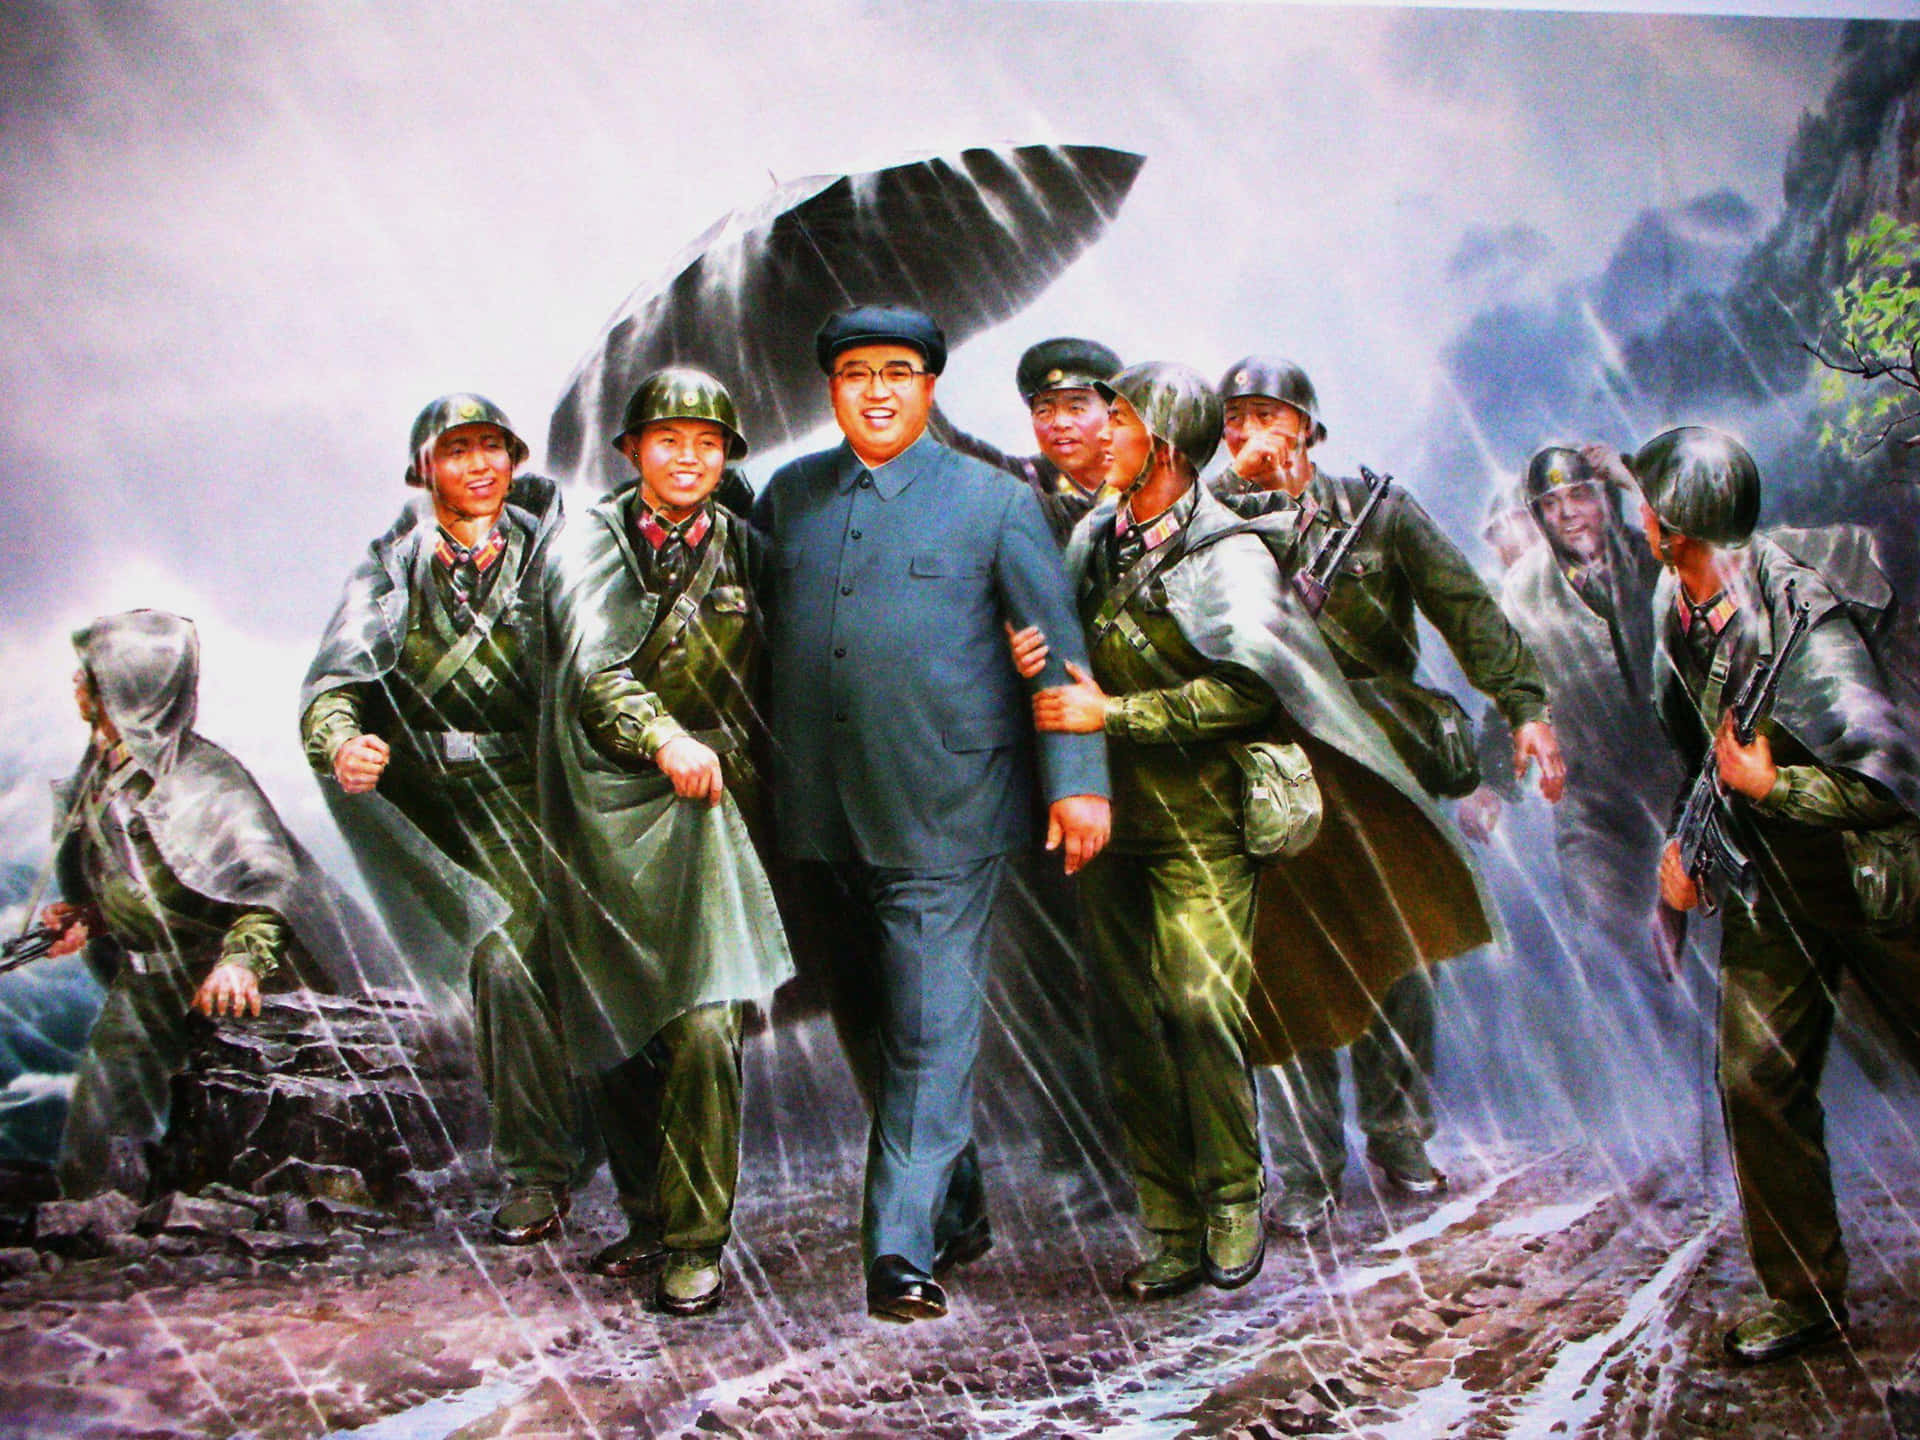 "A mountain path in North Korea"